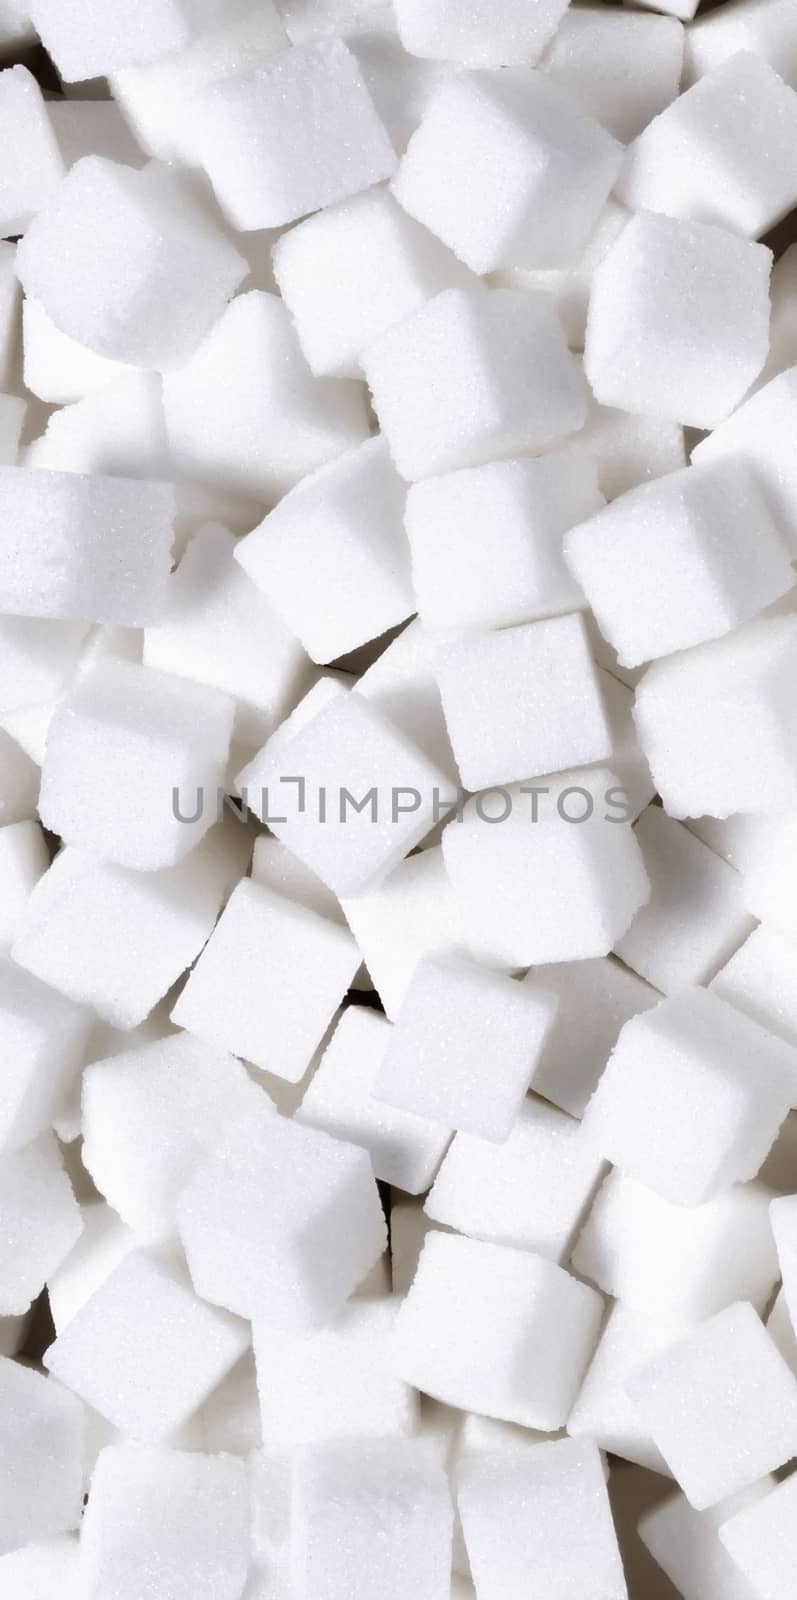 white sugar in cubes texture background